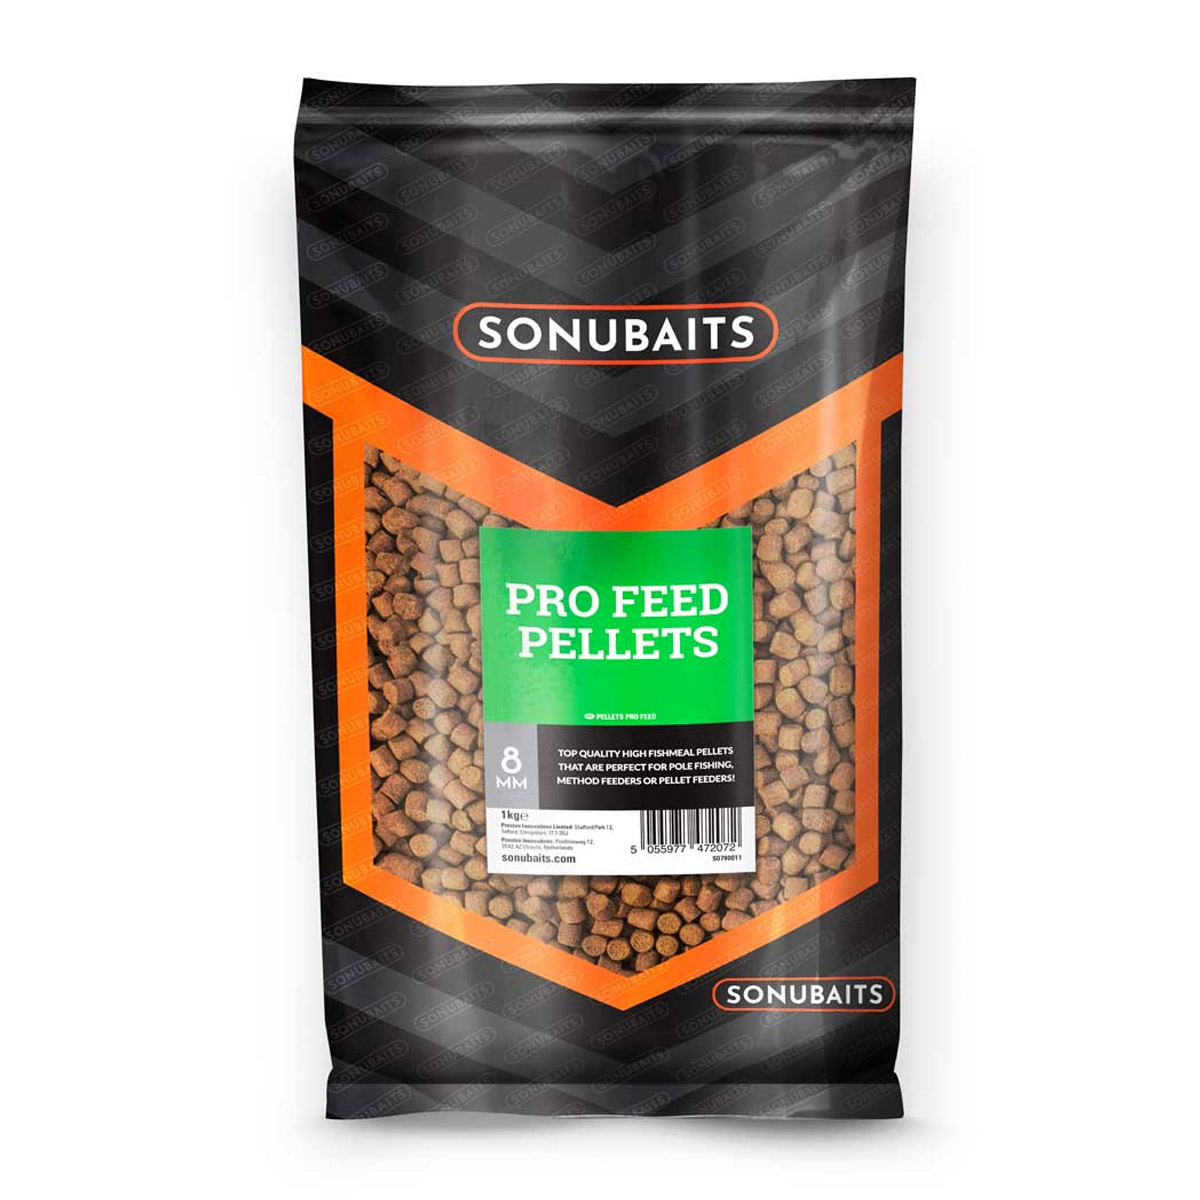 Sonubaits Pro Feed Pellets -  8 mm